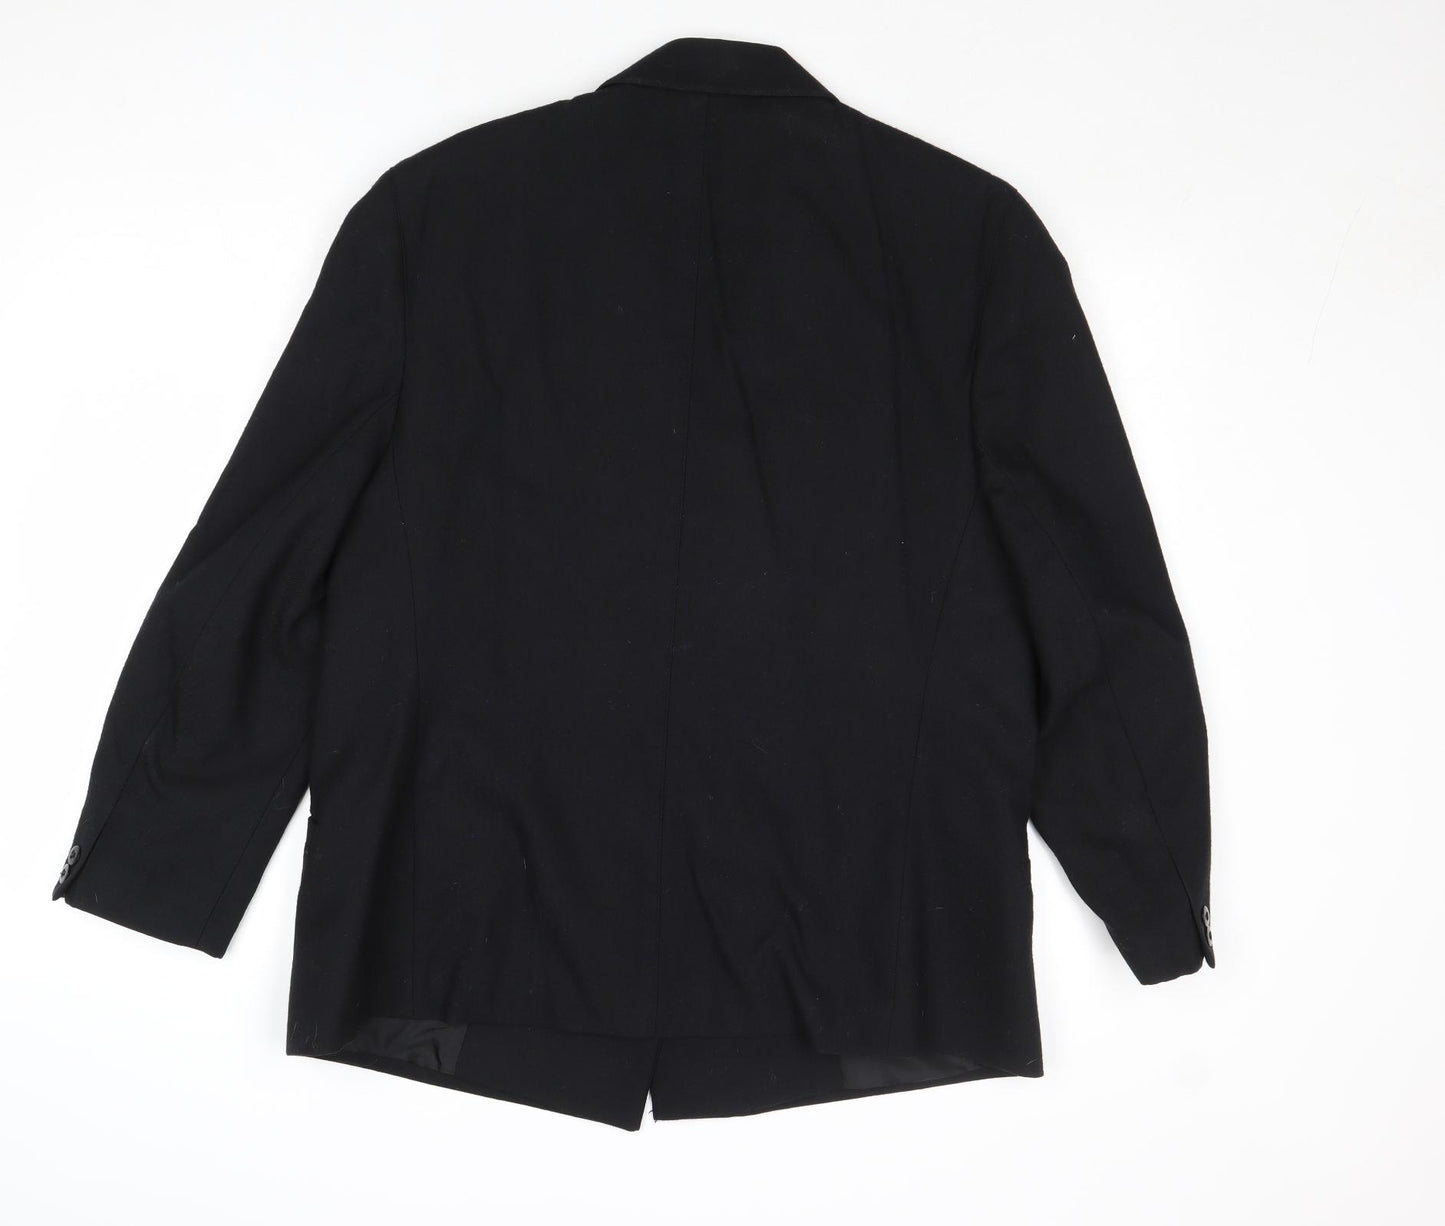 St Michael Womens Black Wool Jacket Suit Jacket Size 14